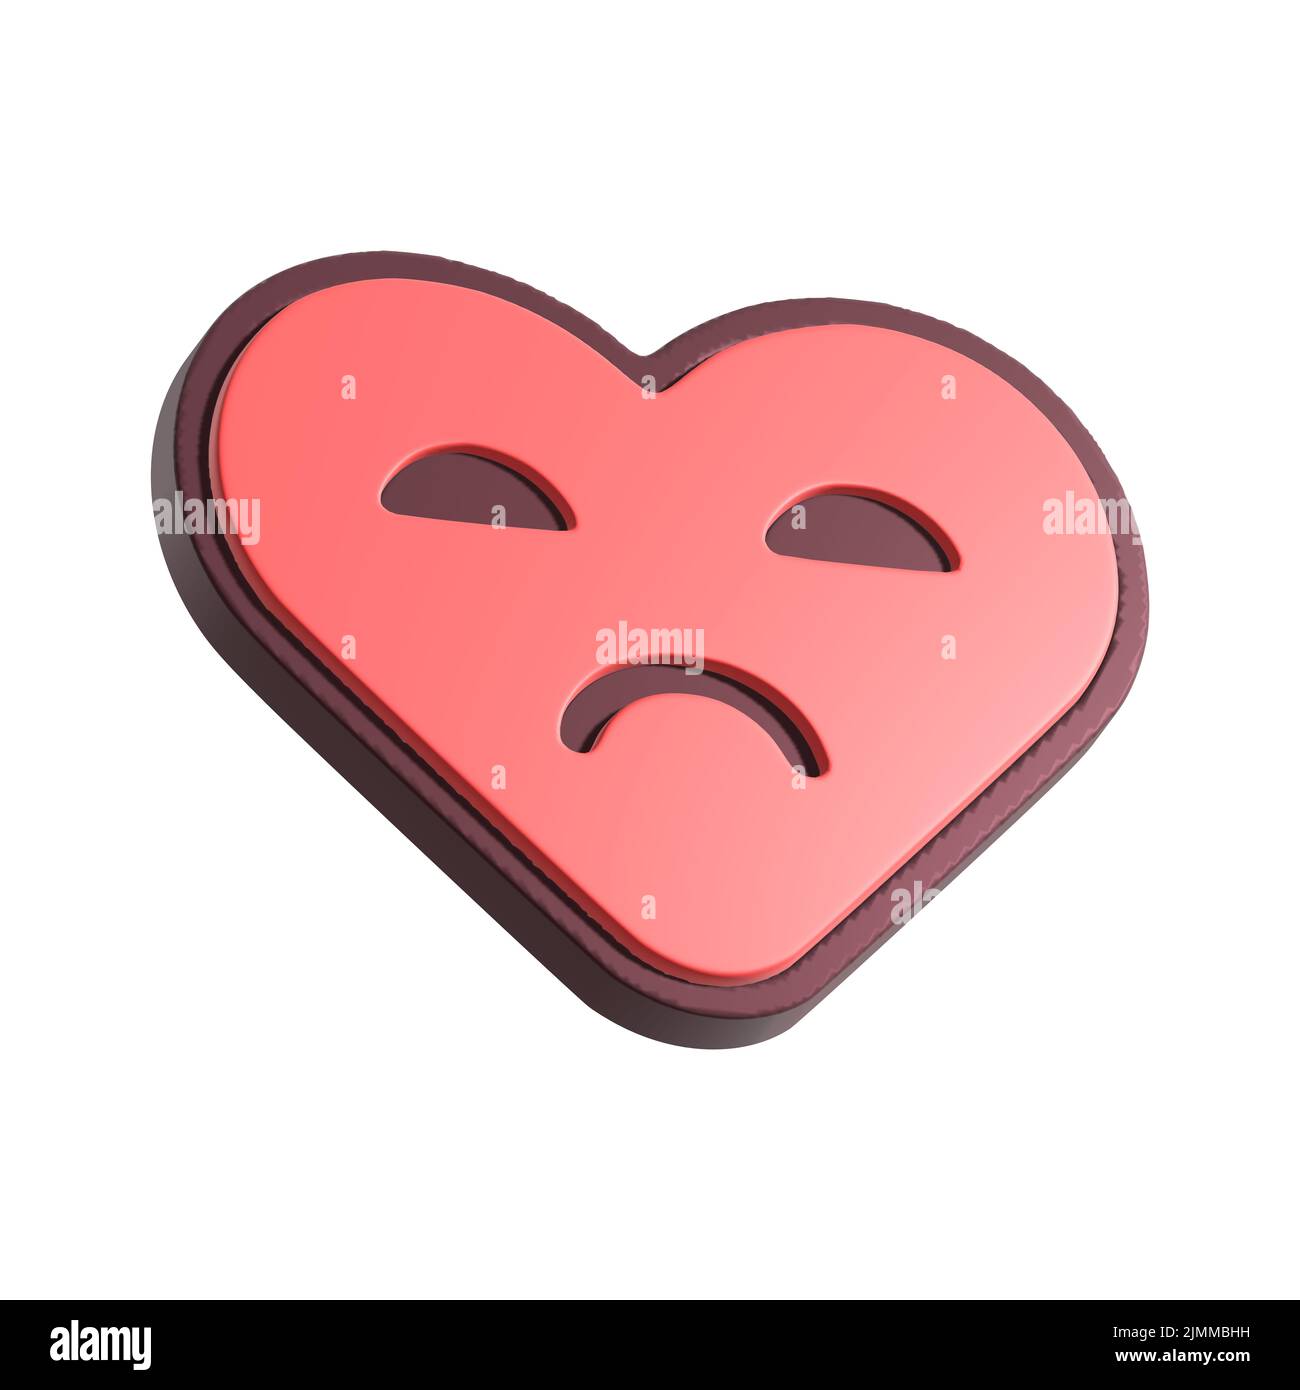 Sad heart 3d illustration. Cartoon heart character isolated on white background. Stock Photo